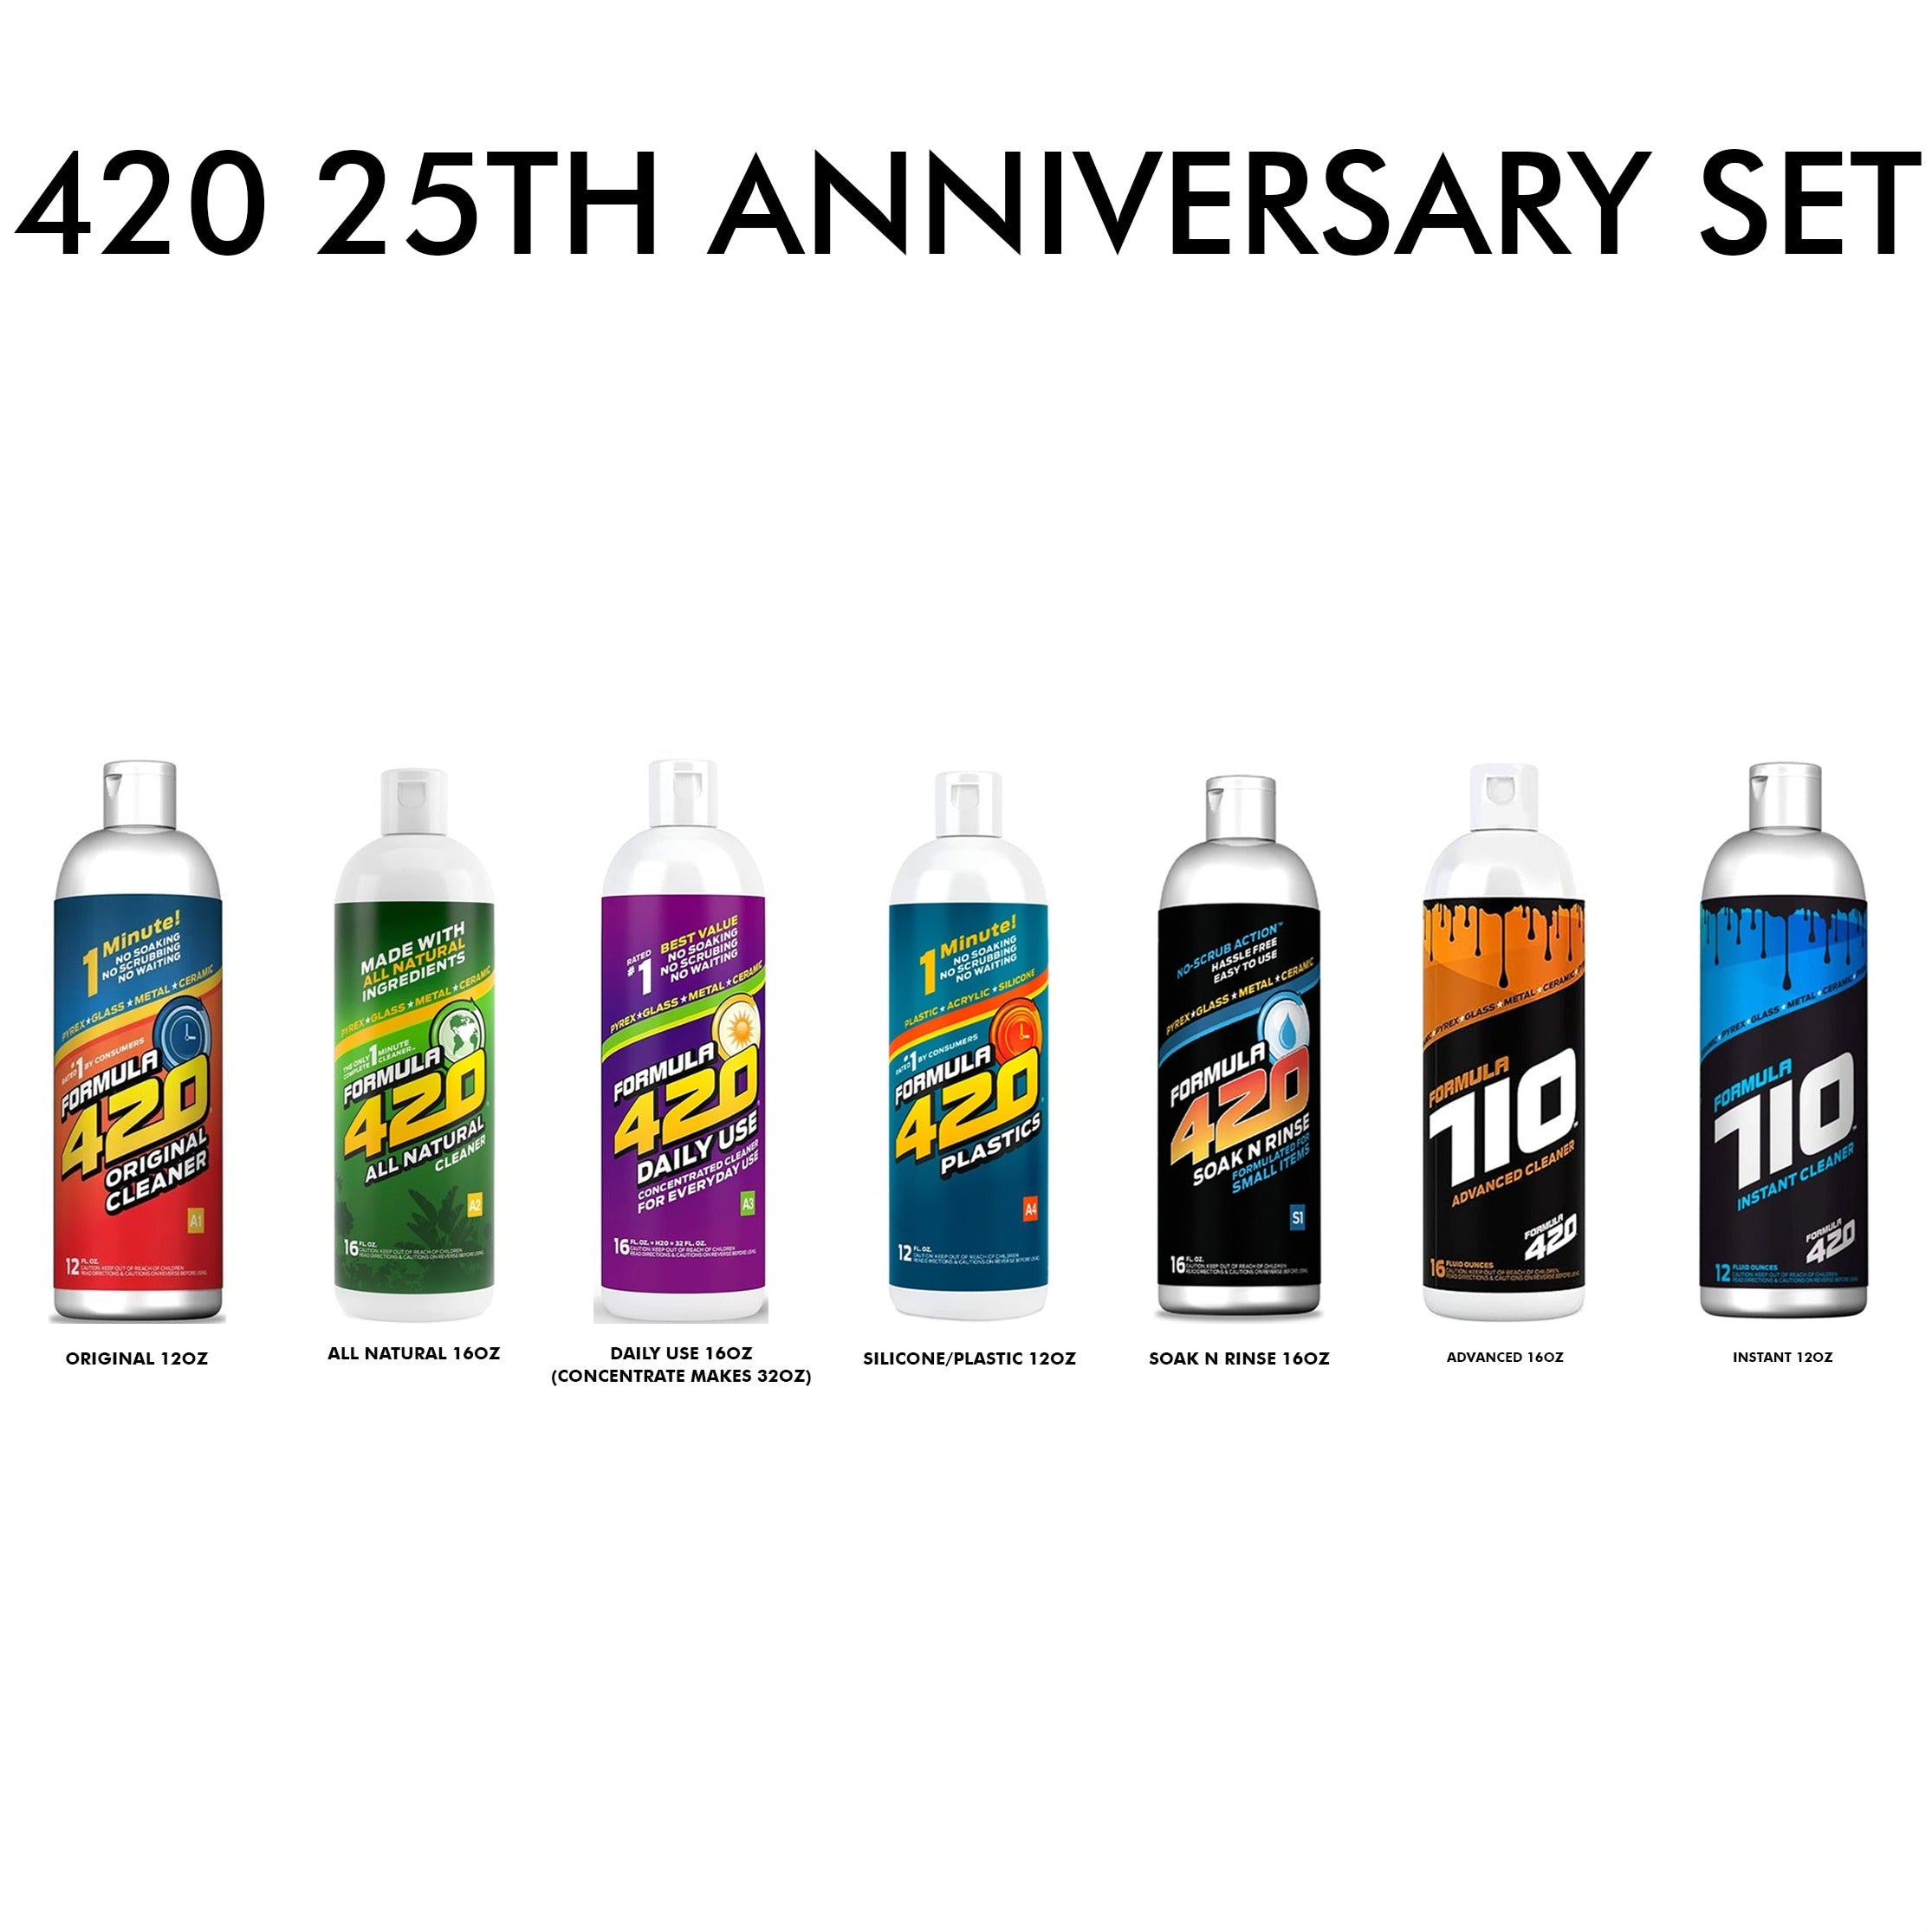 420 25th Anniversary set